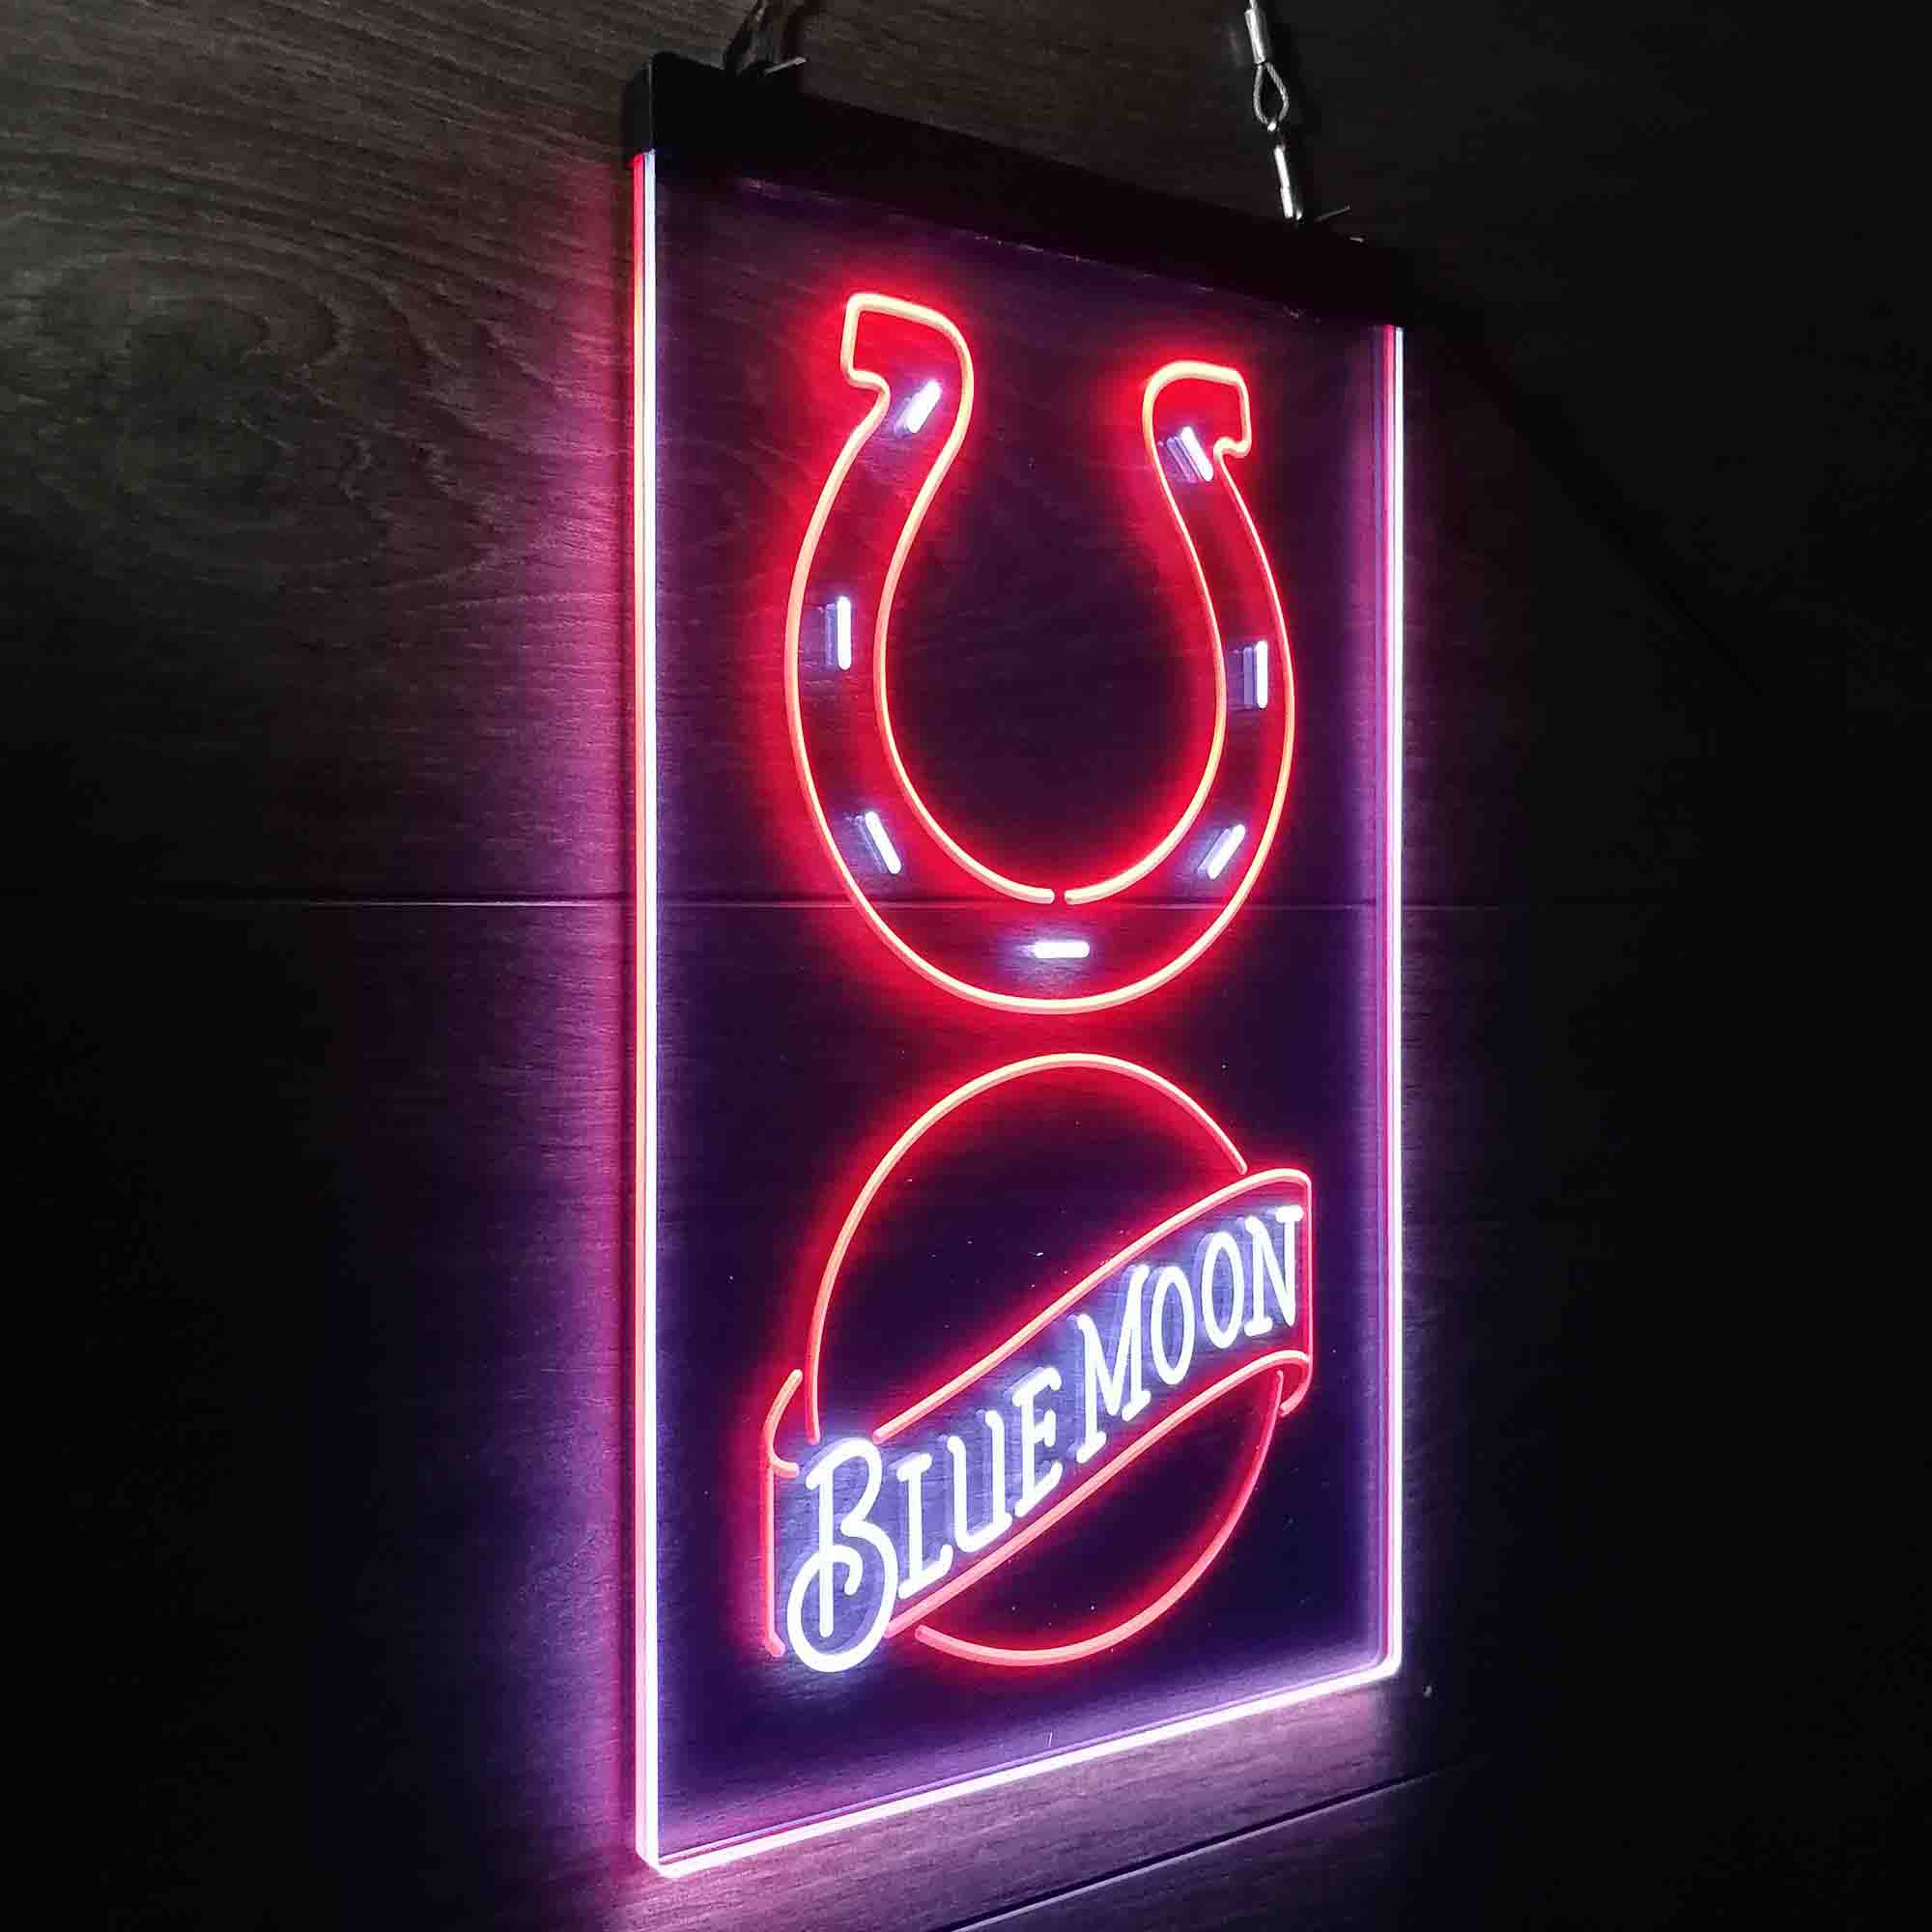 Blue Moon Bar Indianapolis Colts Est. 1953 LED Neon Sign